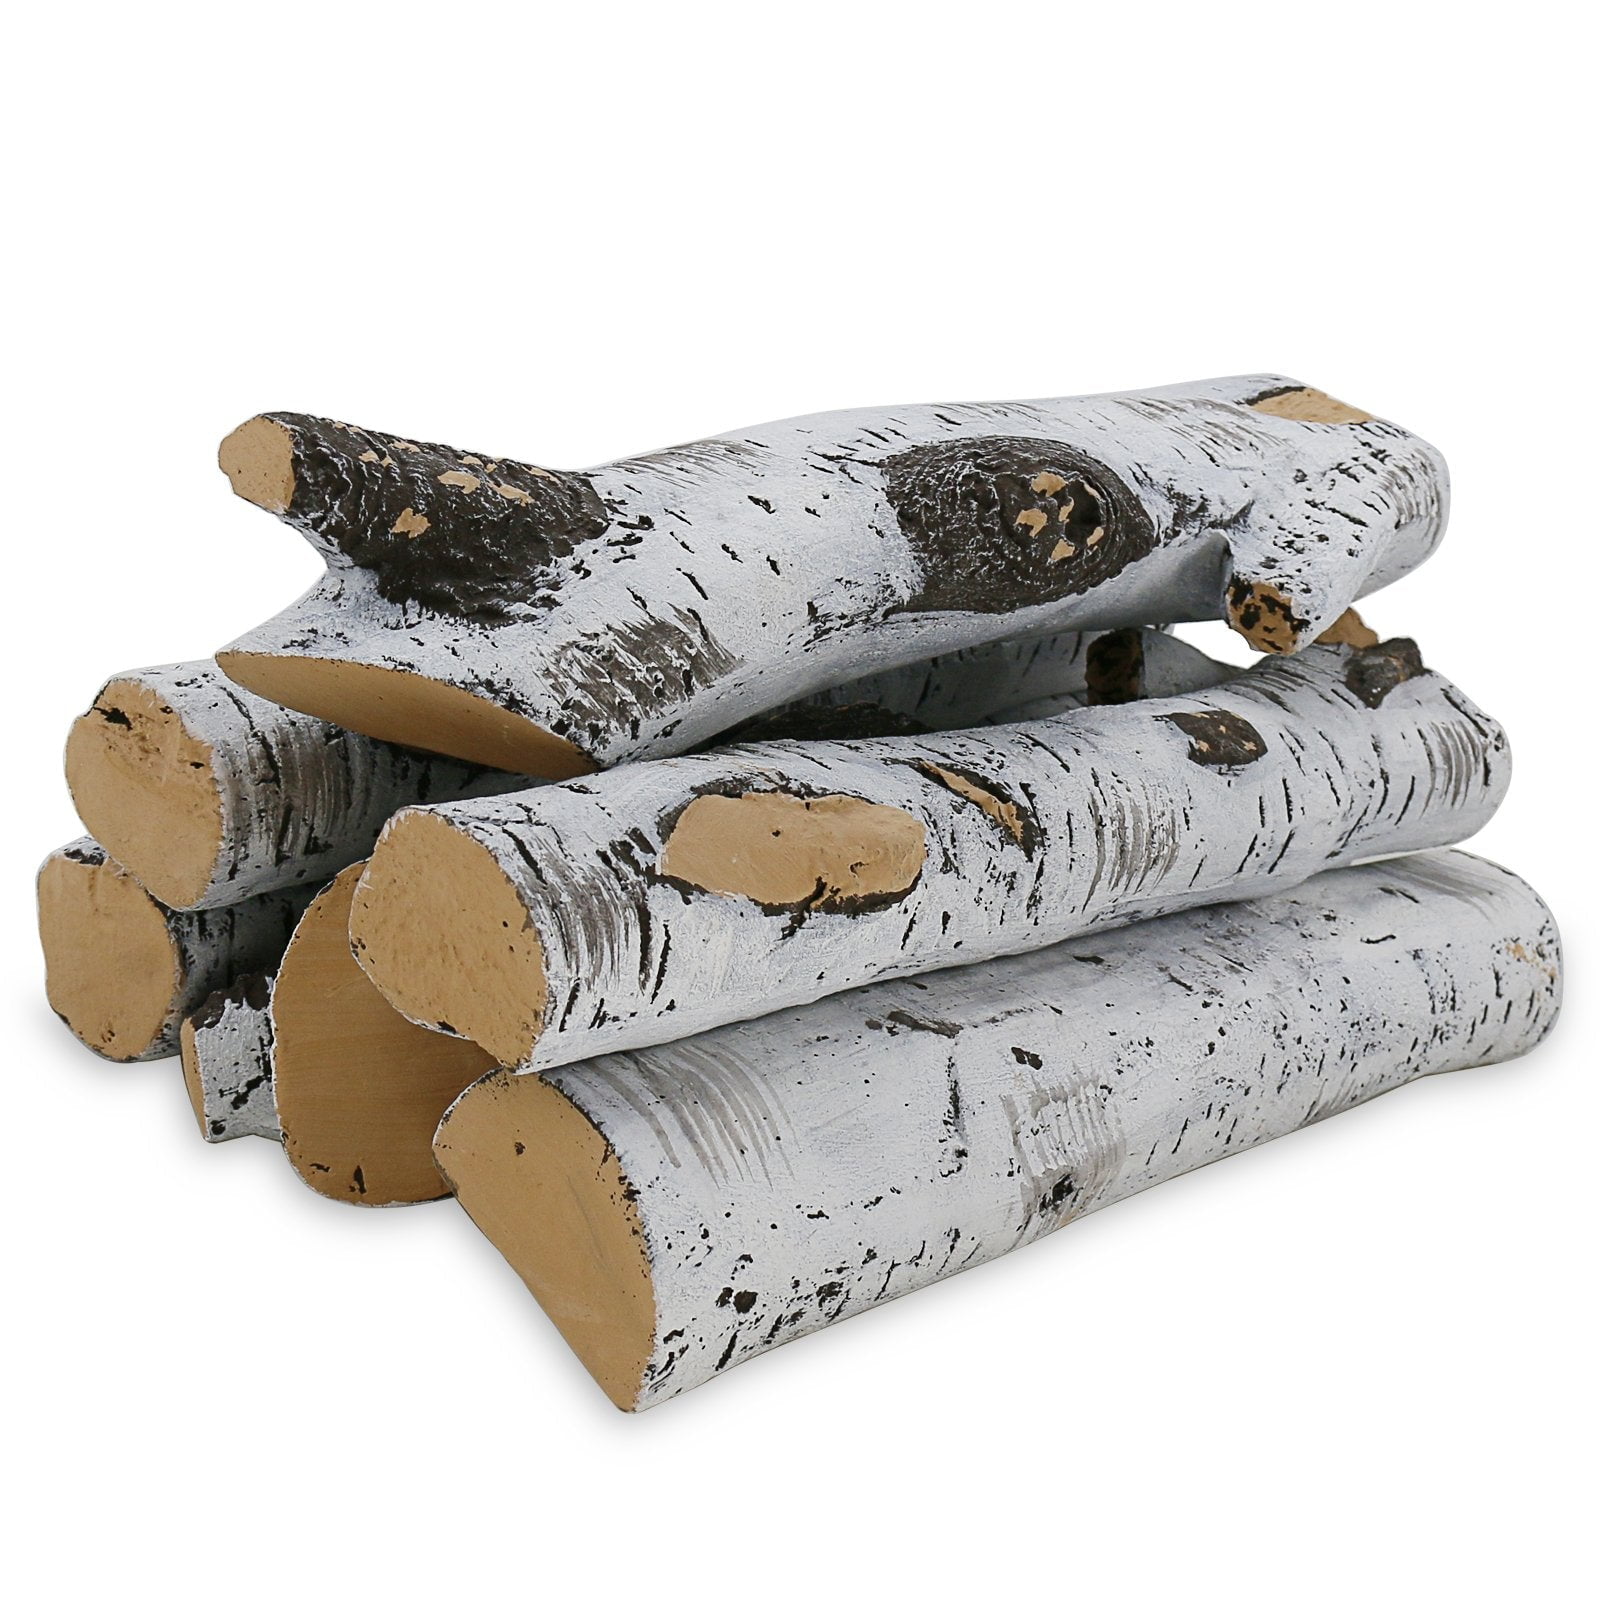 Birch Firewood Logs 15-20 lbs - Natural Birchwood for Fireplace